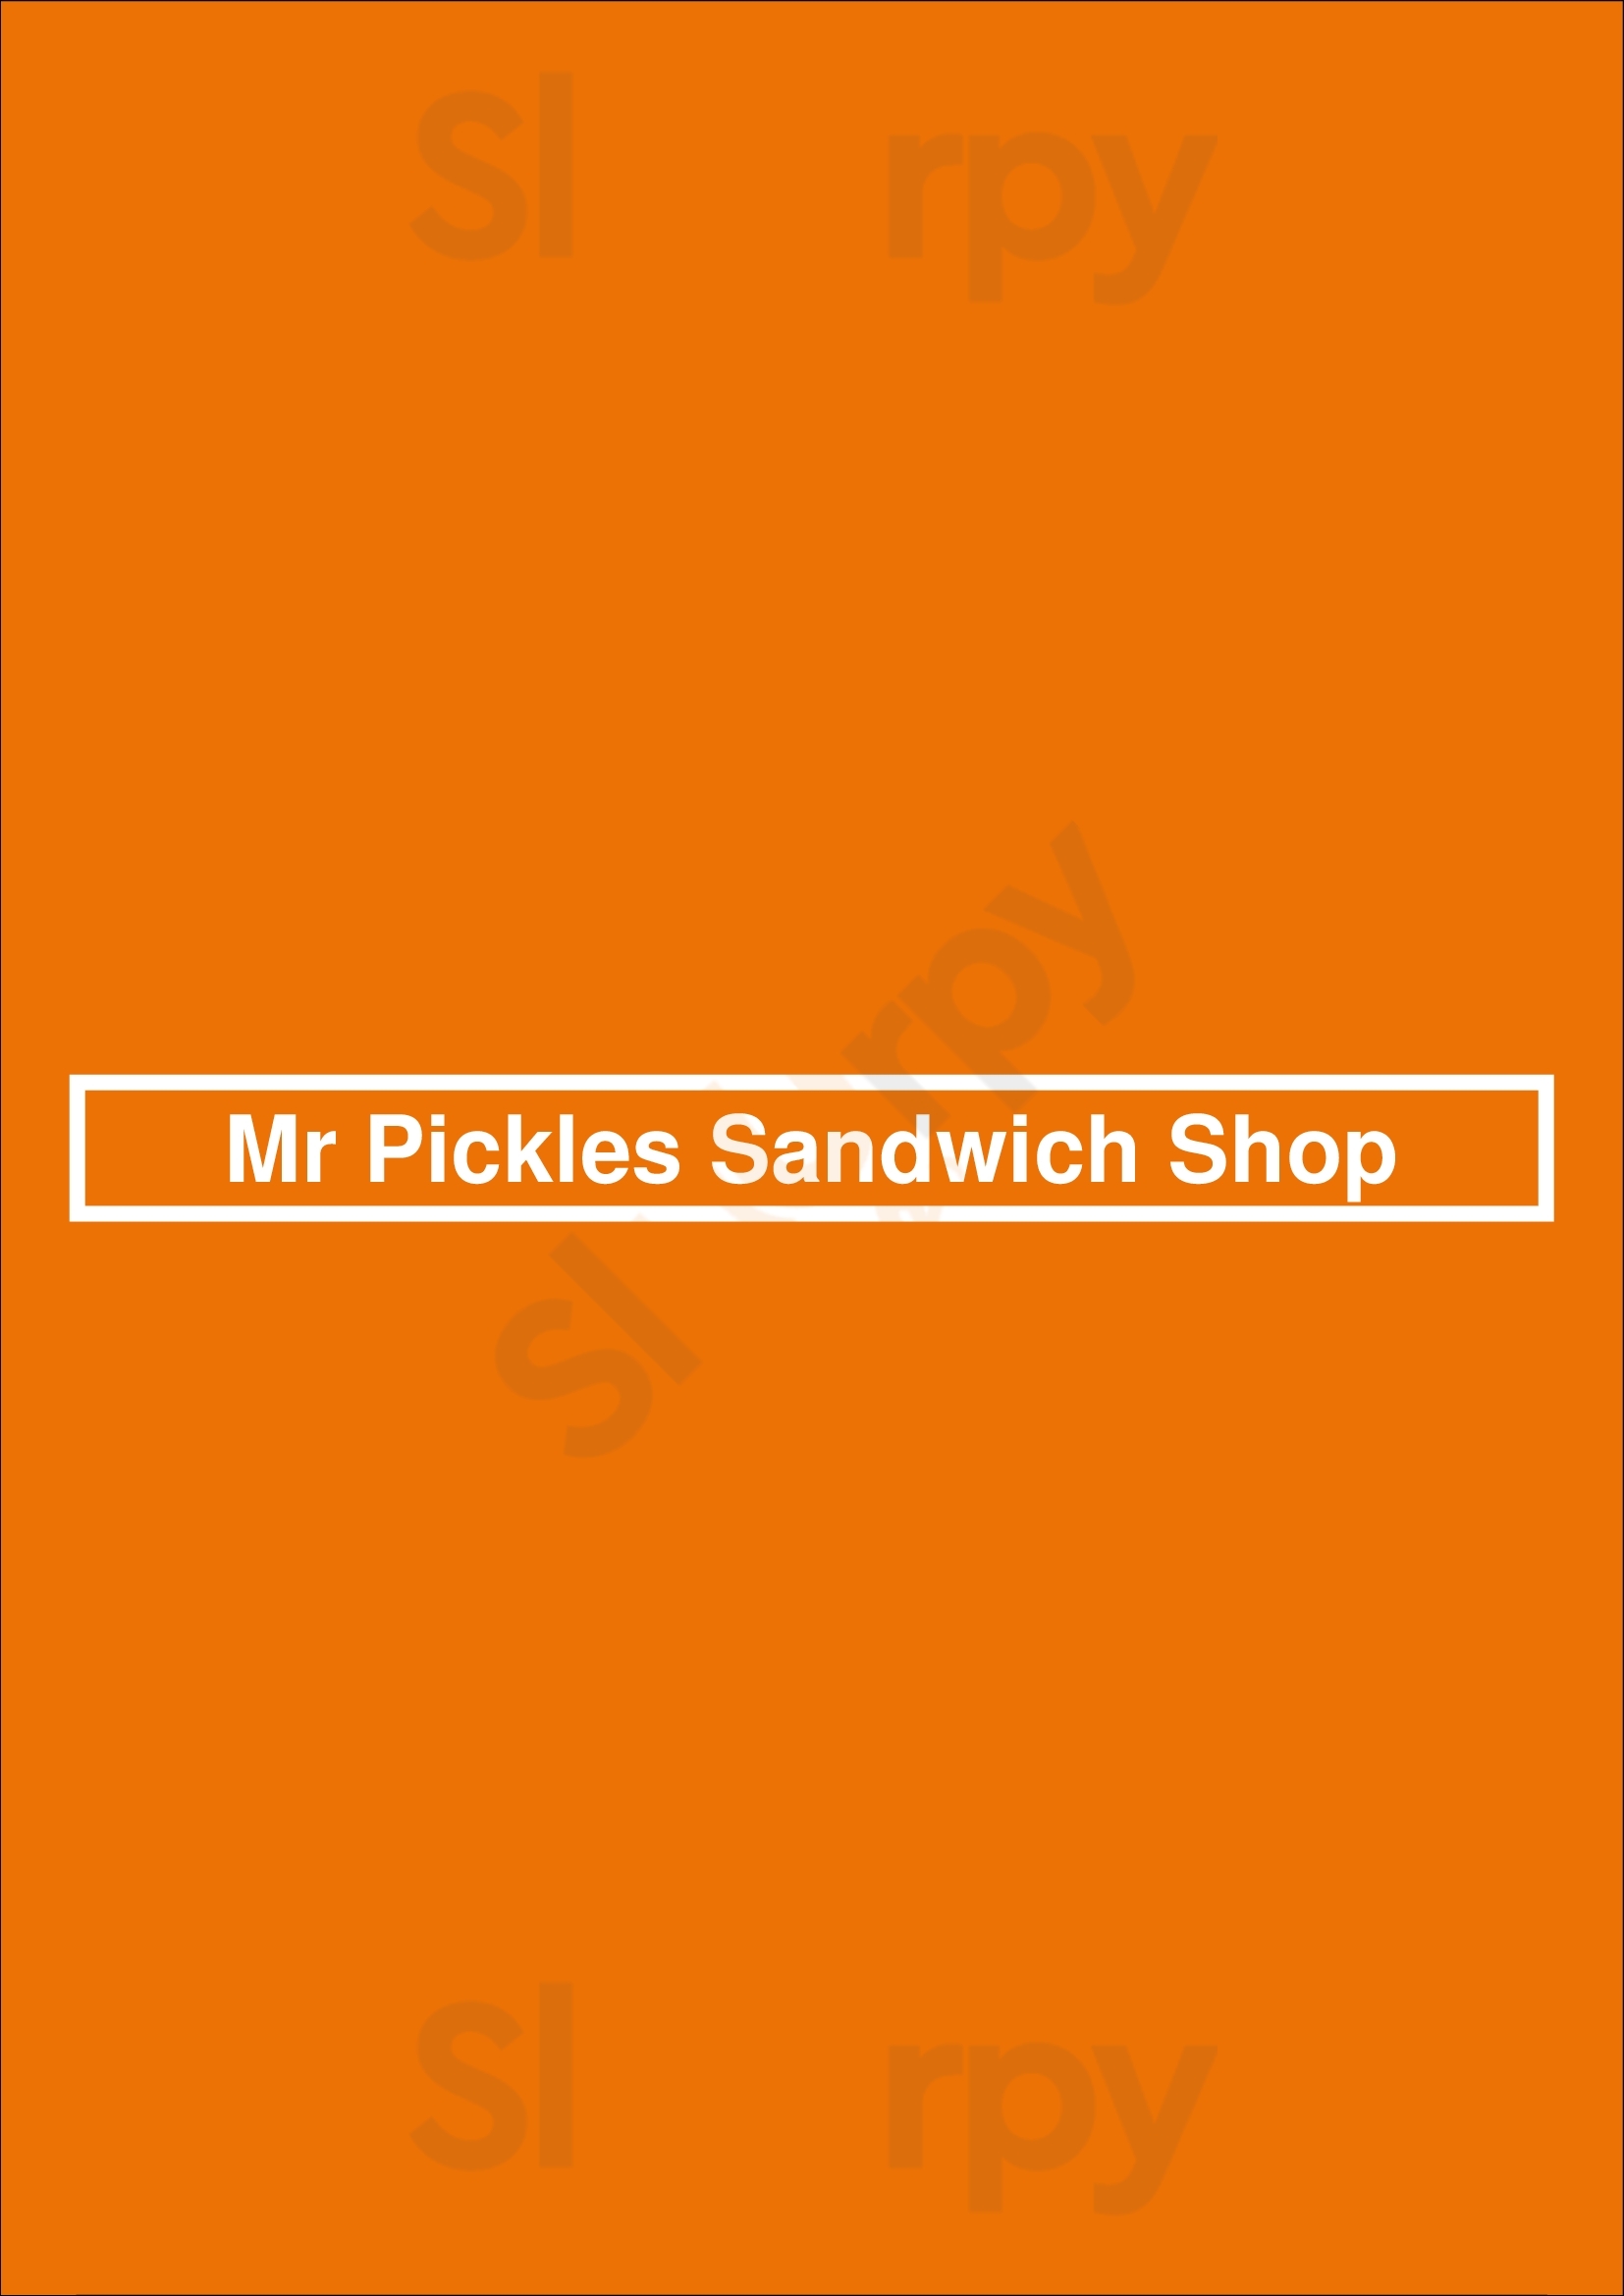 Mr Pickle's Sandwich Shop San Francisco Menu - 1